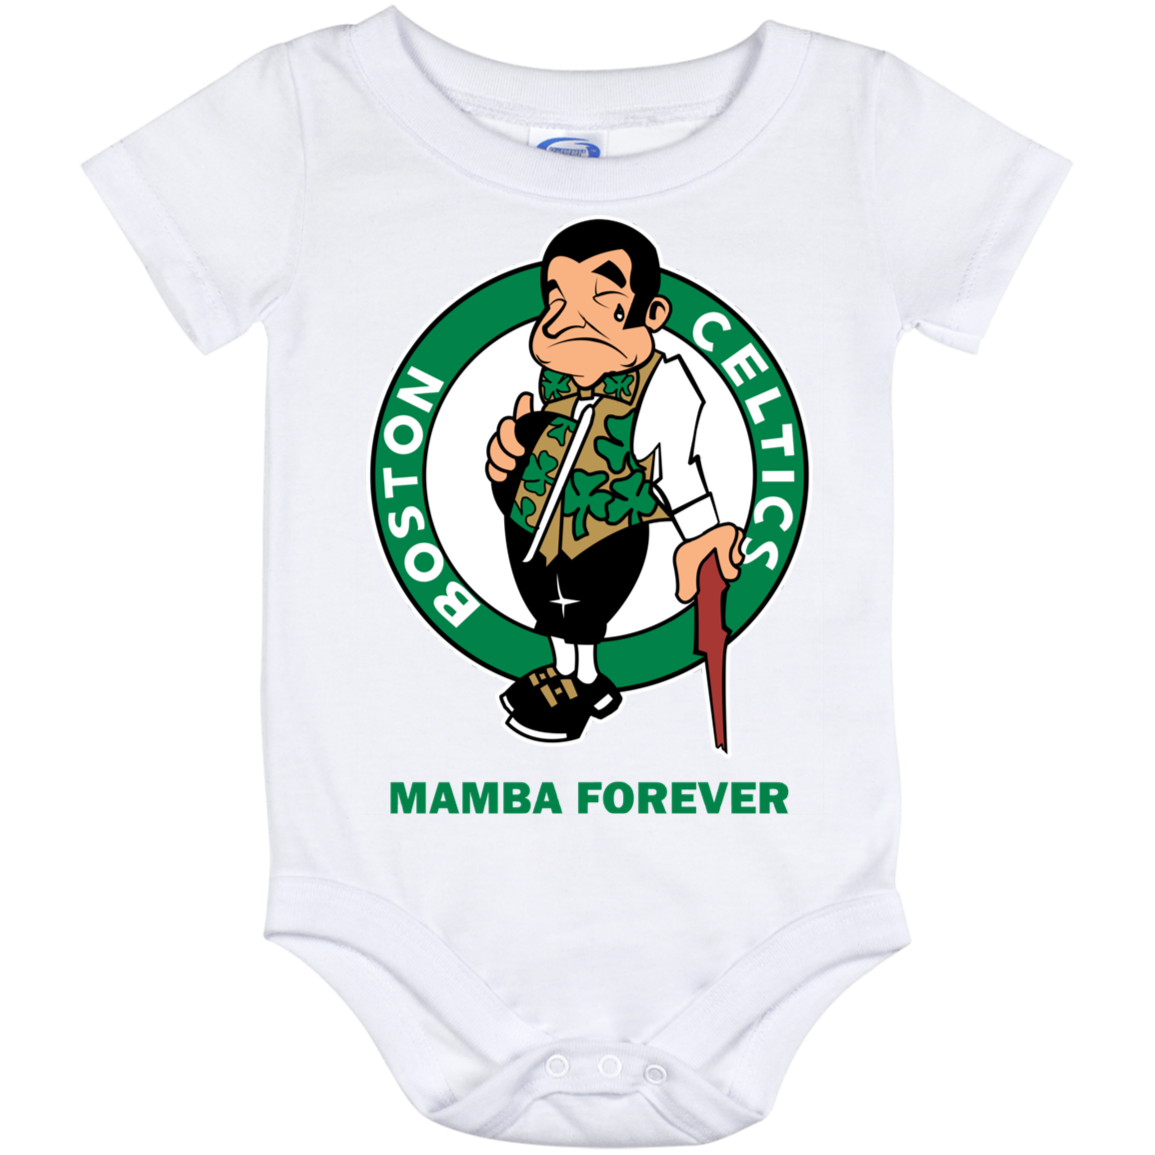 ArtichokeUSA Custom Design. RIP Kobe. Mamba Forever. Celtics / Lakers Fan Art Tribute. Baby Onesie 12 Month